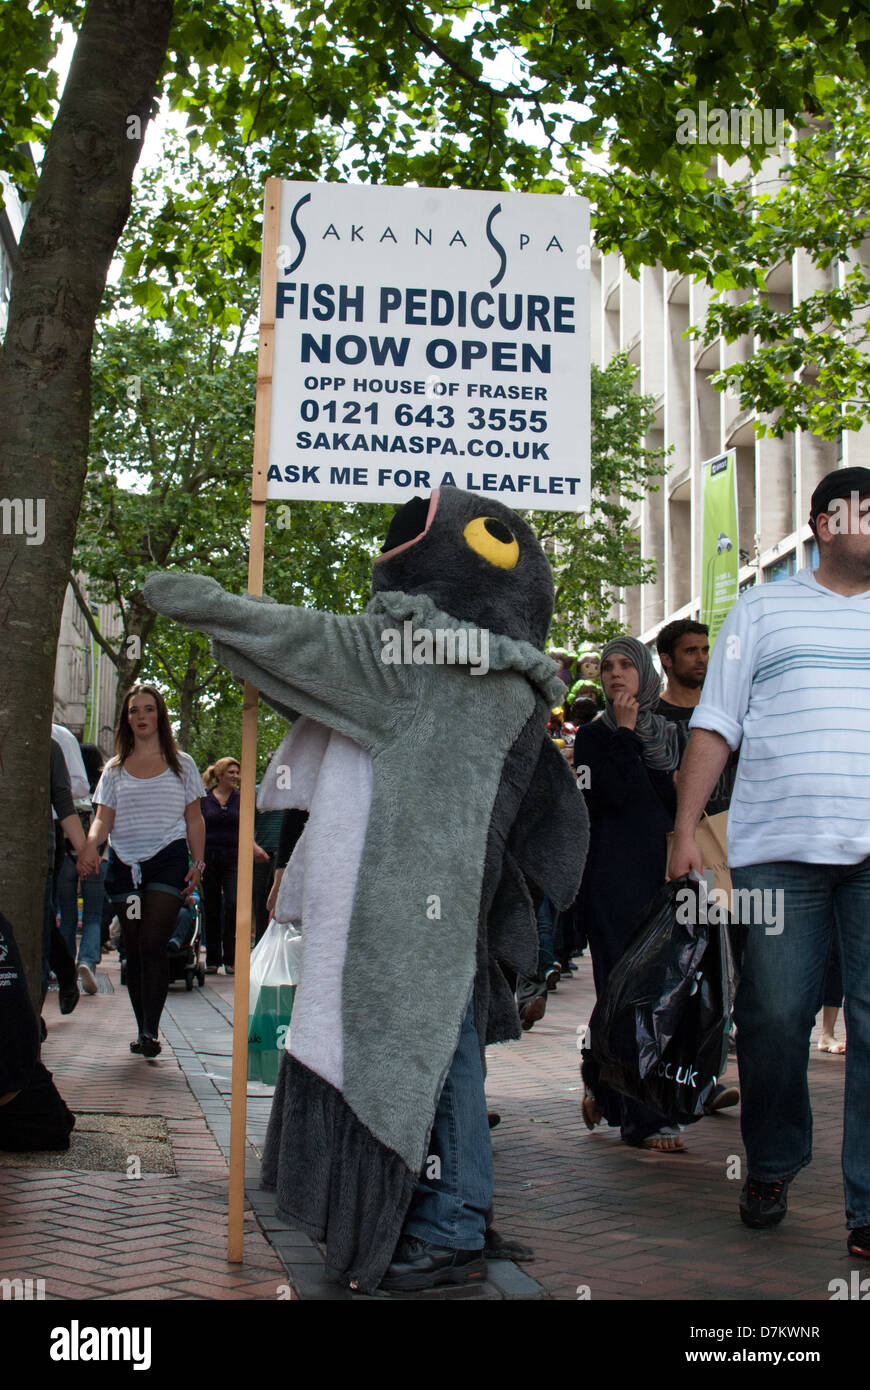 Street advertising in Birmingham for Fish Pedicures, Birmingham, England. Stock Photo